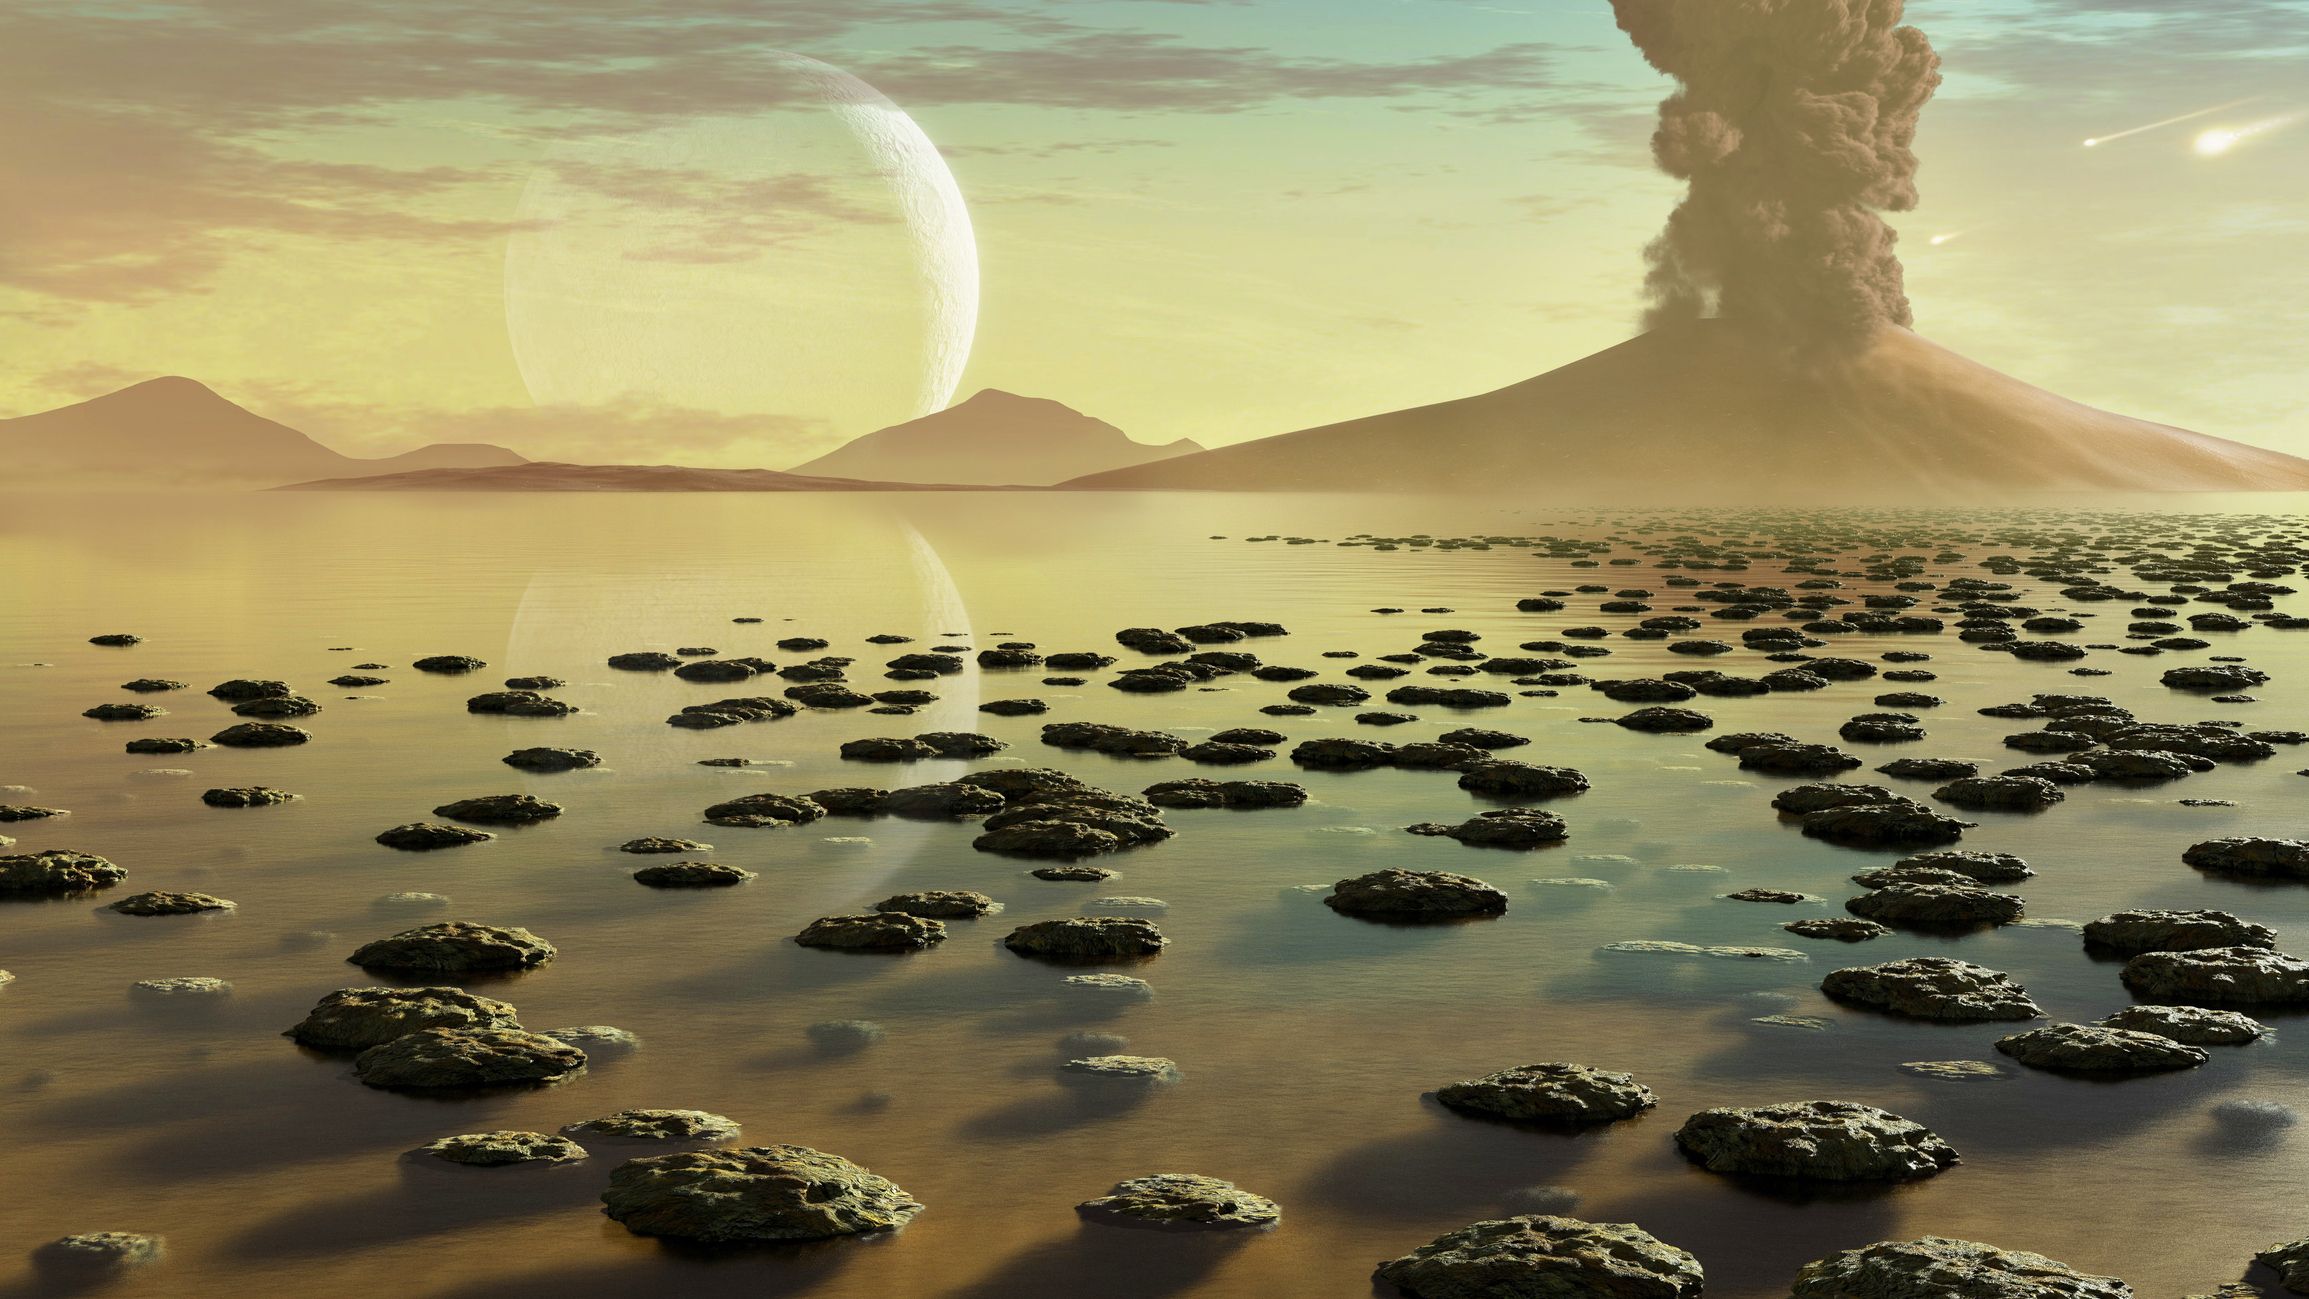 stromatolites-on-early-earth-royalty-free-image-1670963451.jpg